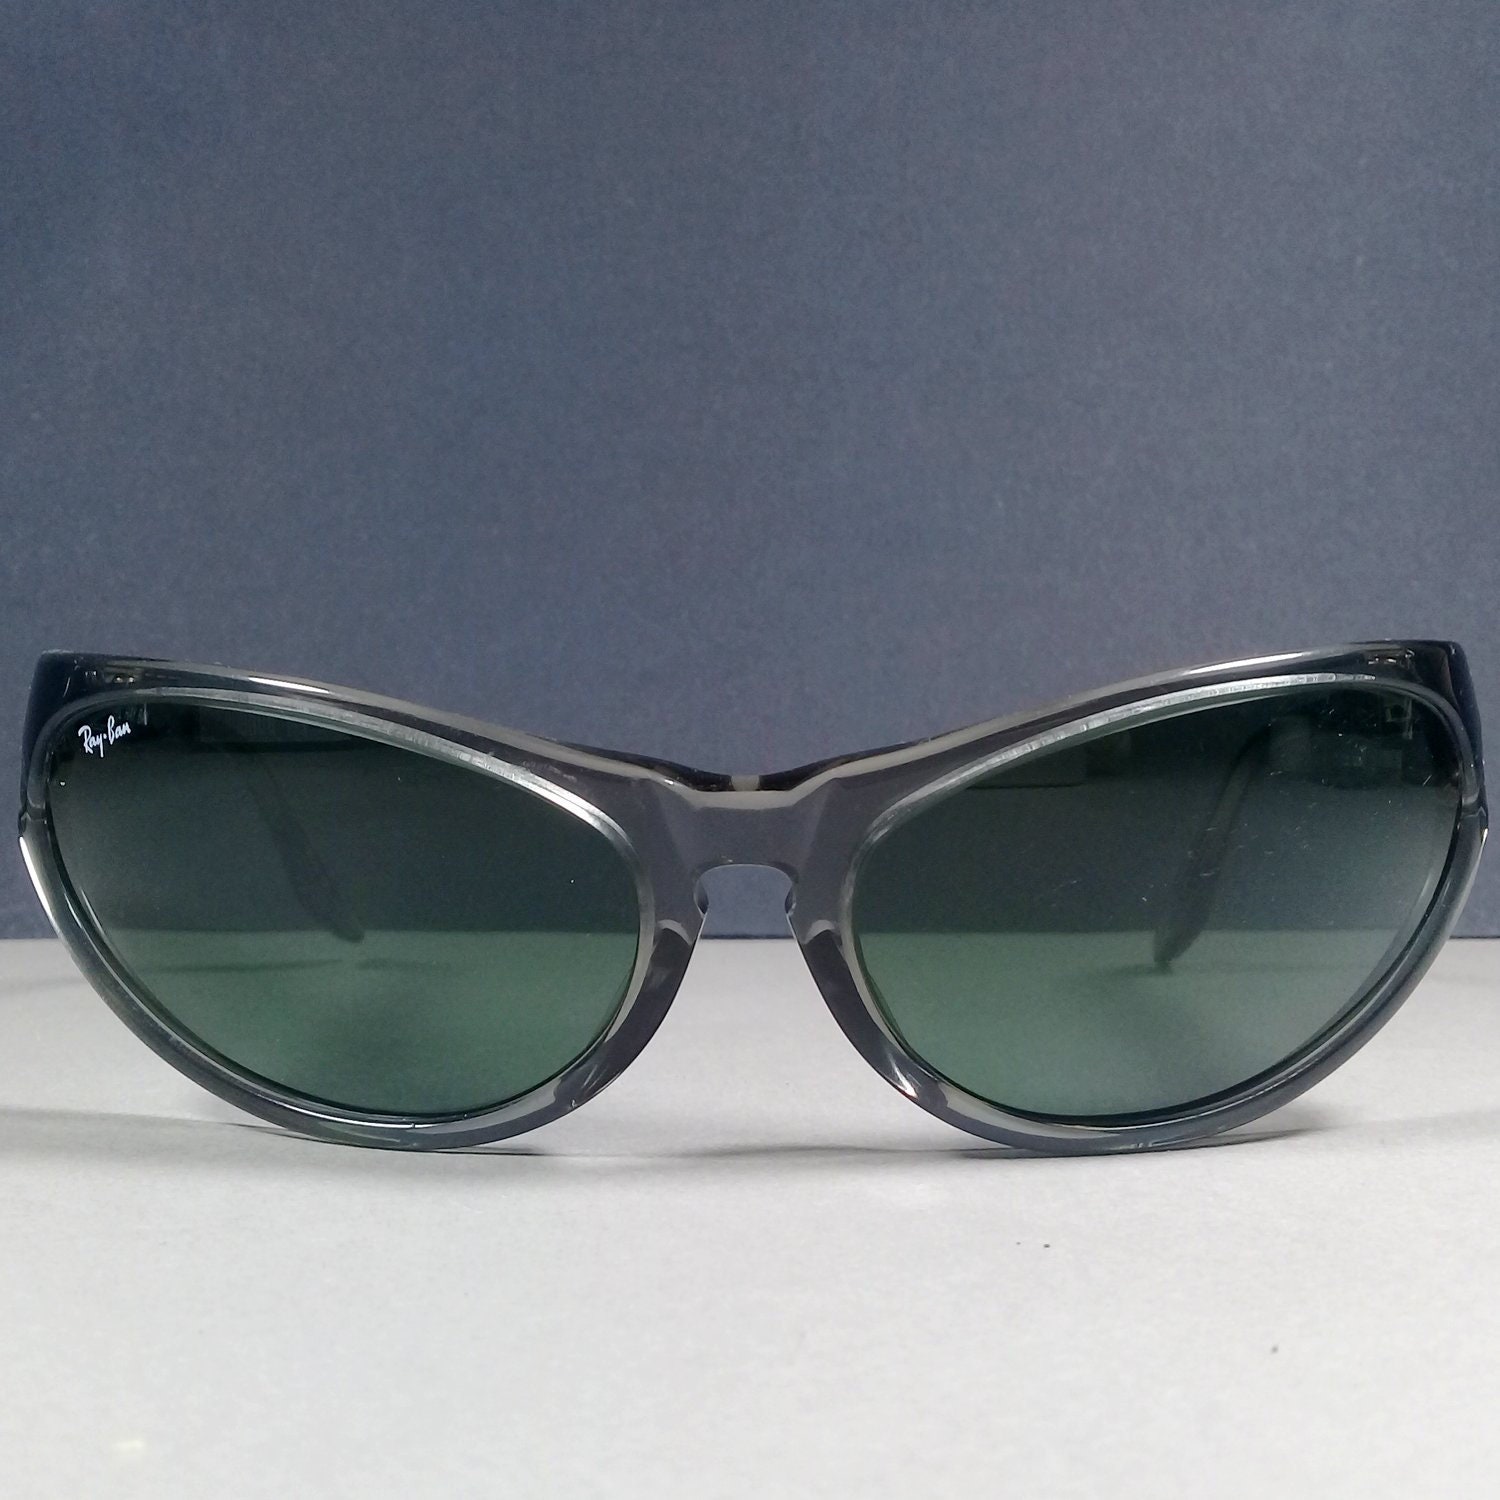 Ray Ban B&L W2199 Green Translucent Sidestreet Sunglasses Bausch & Lomb